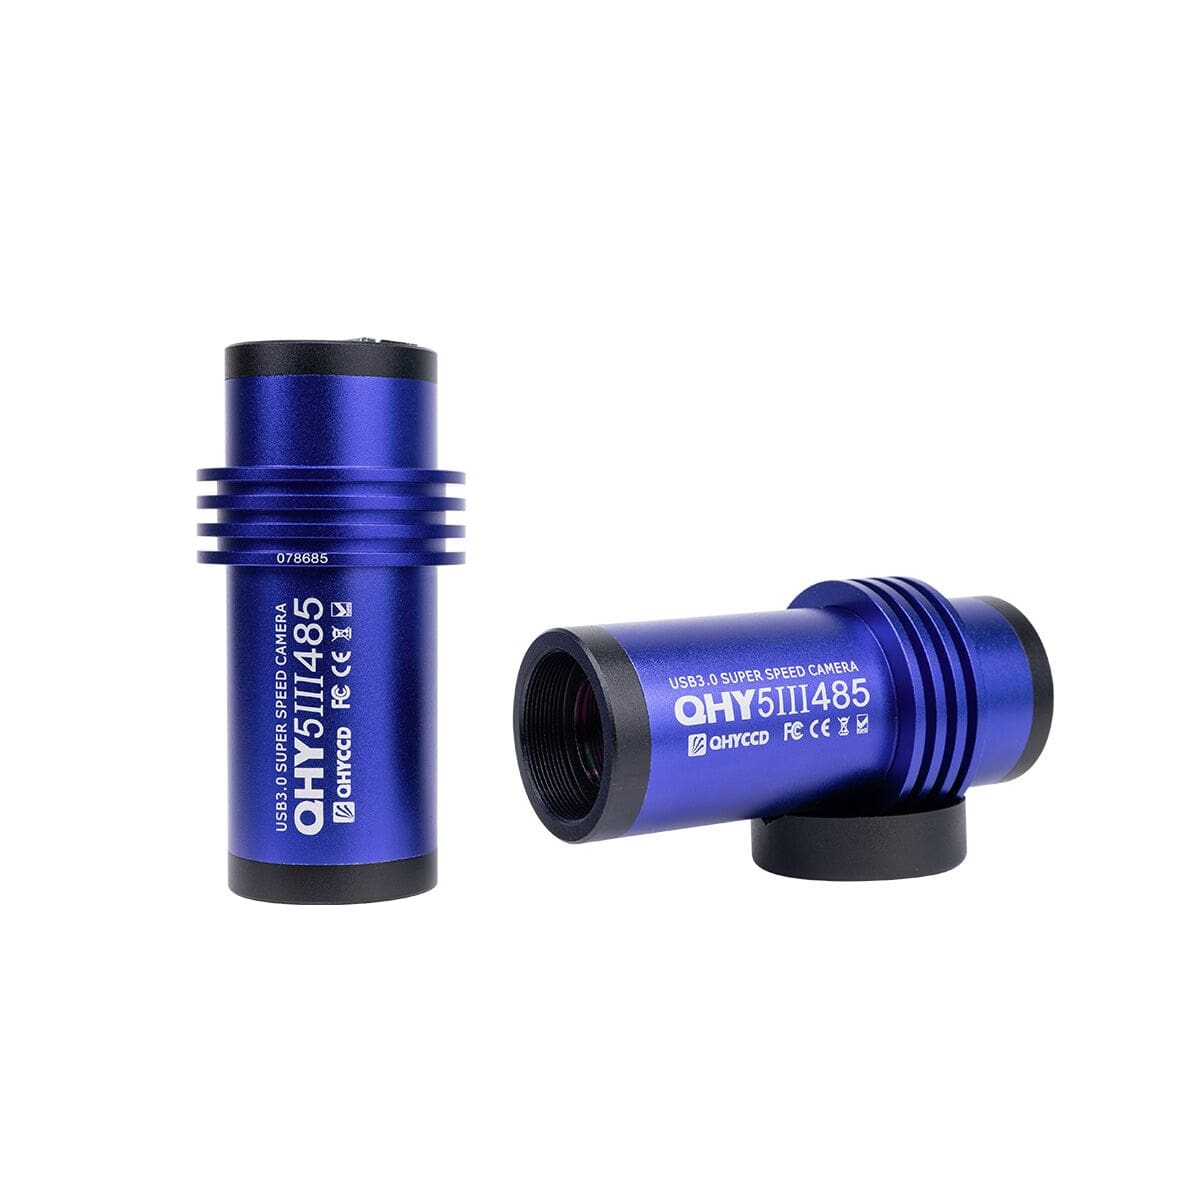 QHYCCD-Starm84Pro Drahtlose Box, Blau Box, Borne de caméra